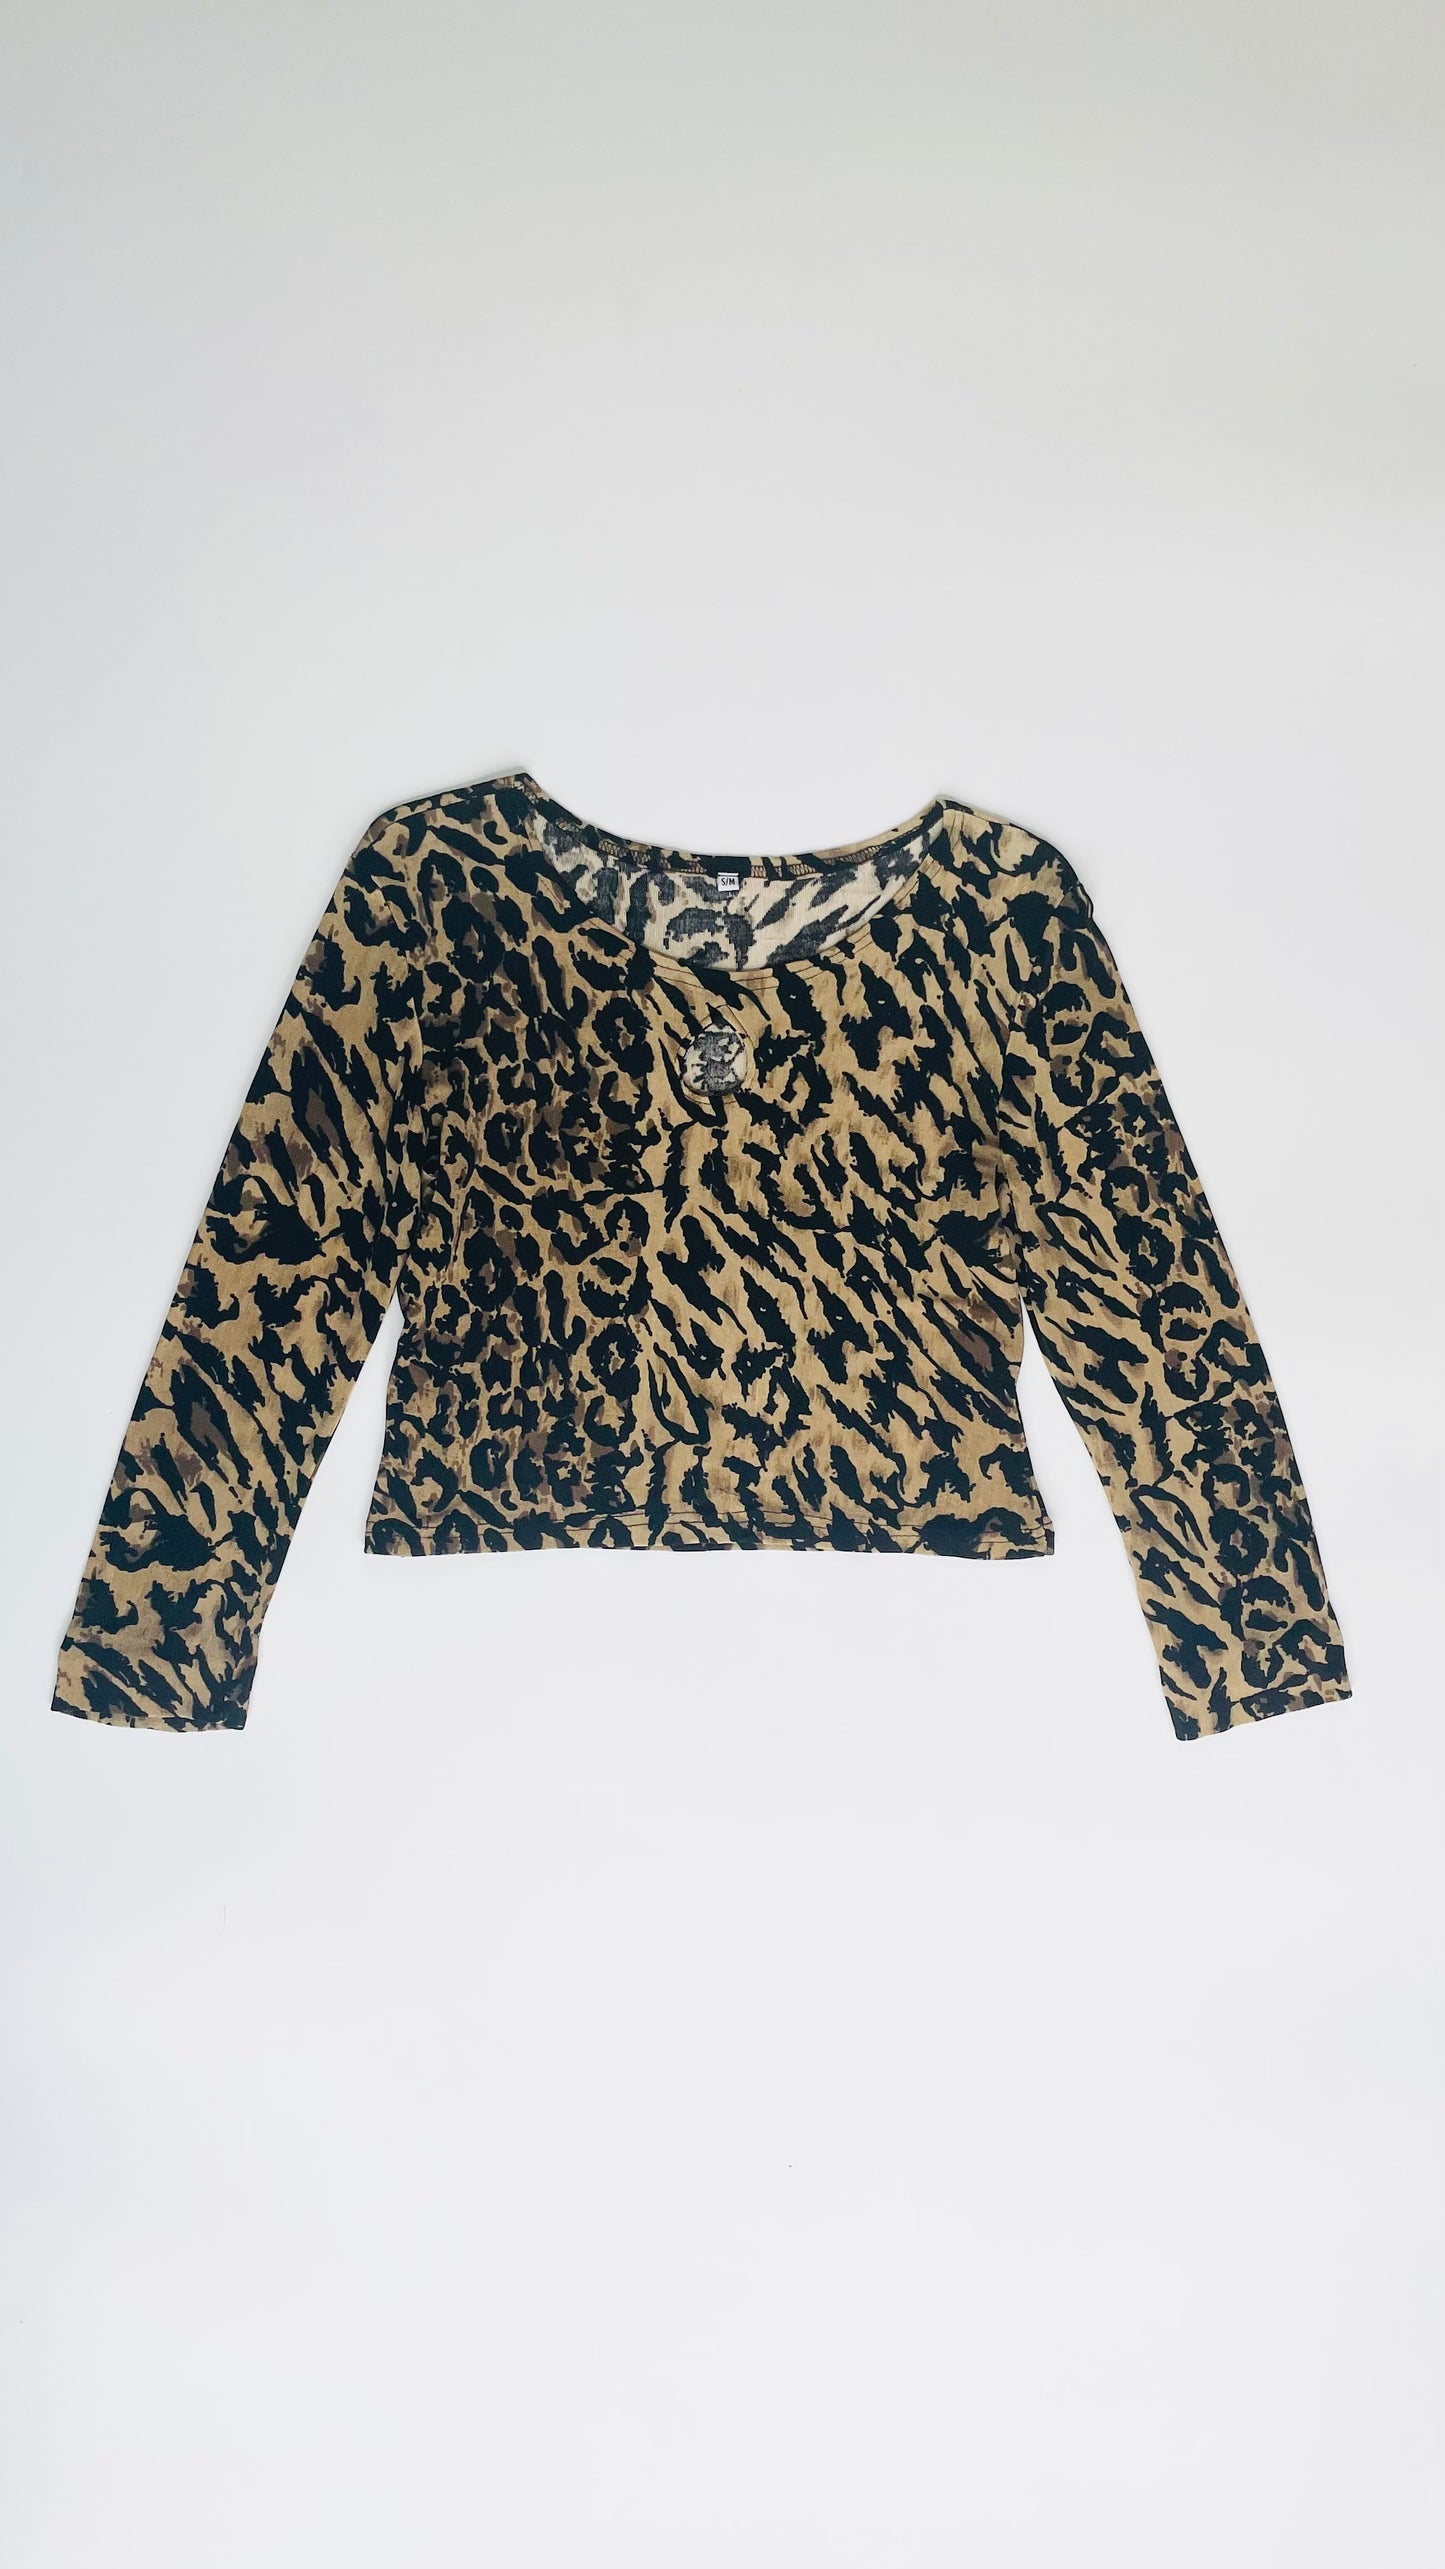 Vintage 90s slinky leopard print top - Size S